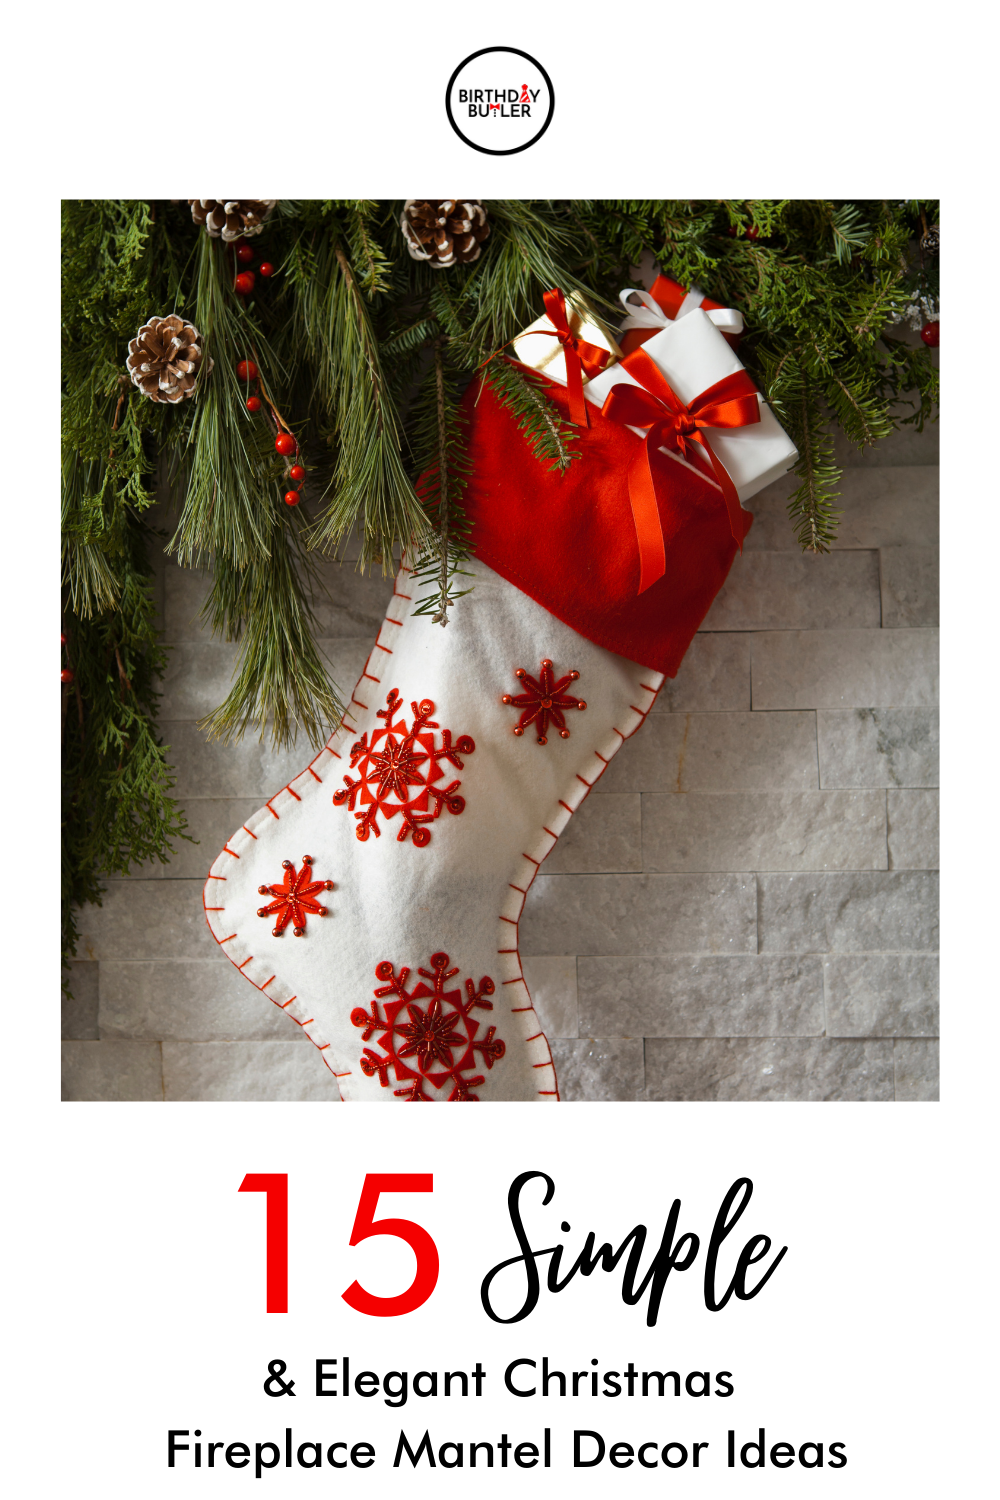 Simple and Elegant Christmas Fireplace Mantel Decor Ideas